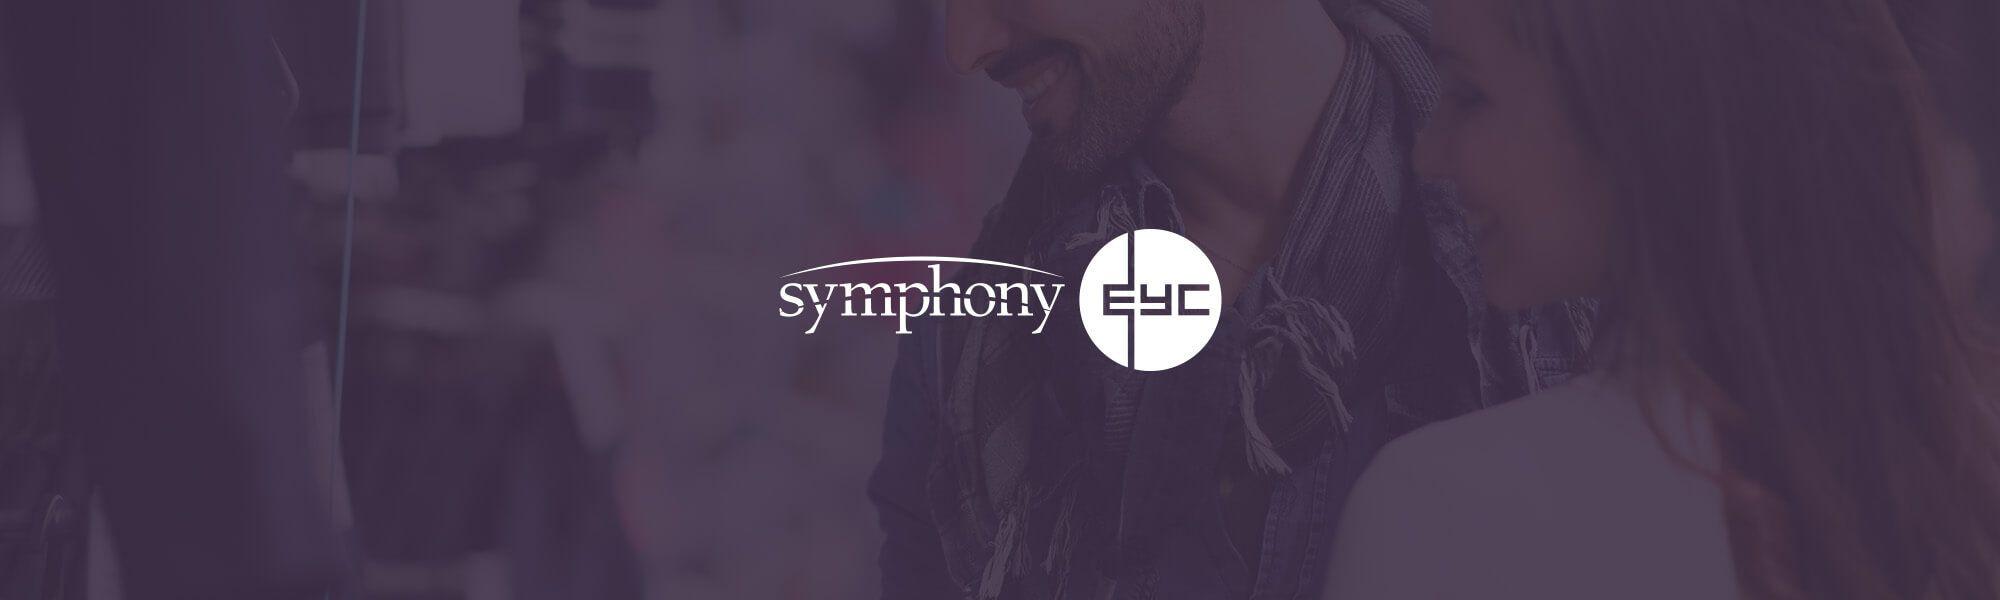 Symphony EYC Logo - Symphony EYC Showcase | Internet Dreams Studio